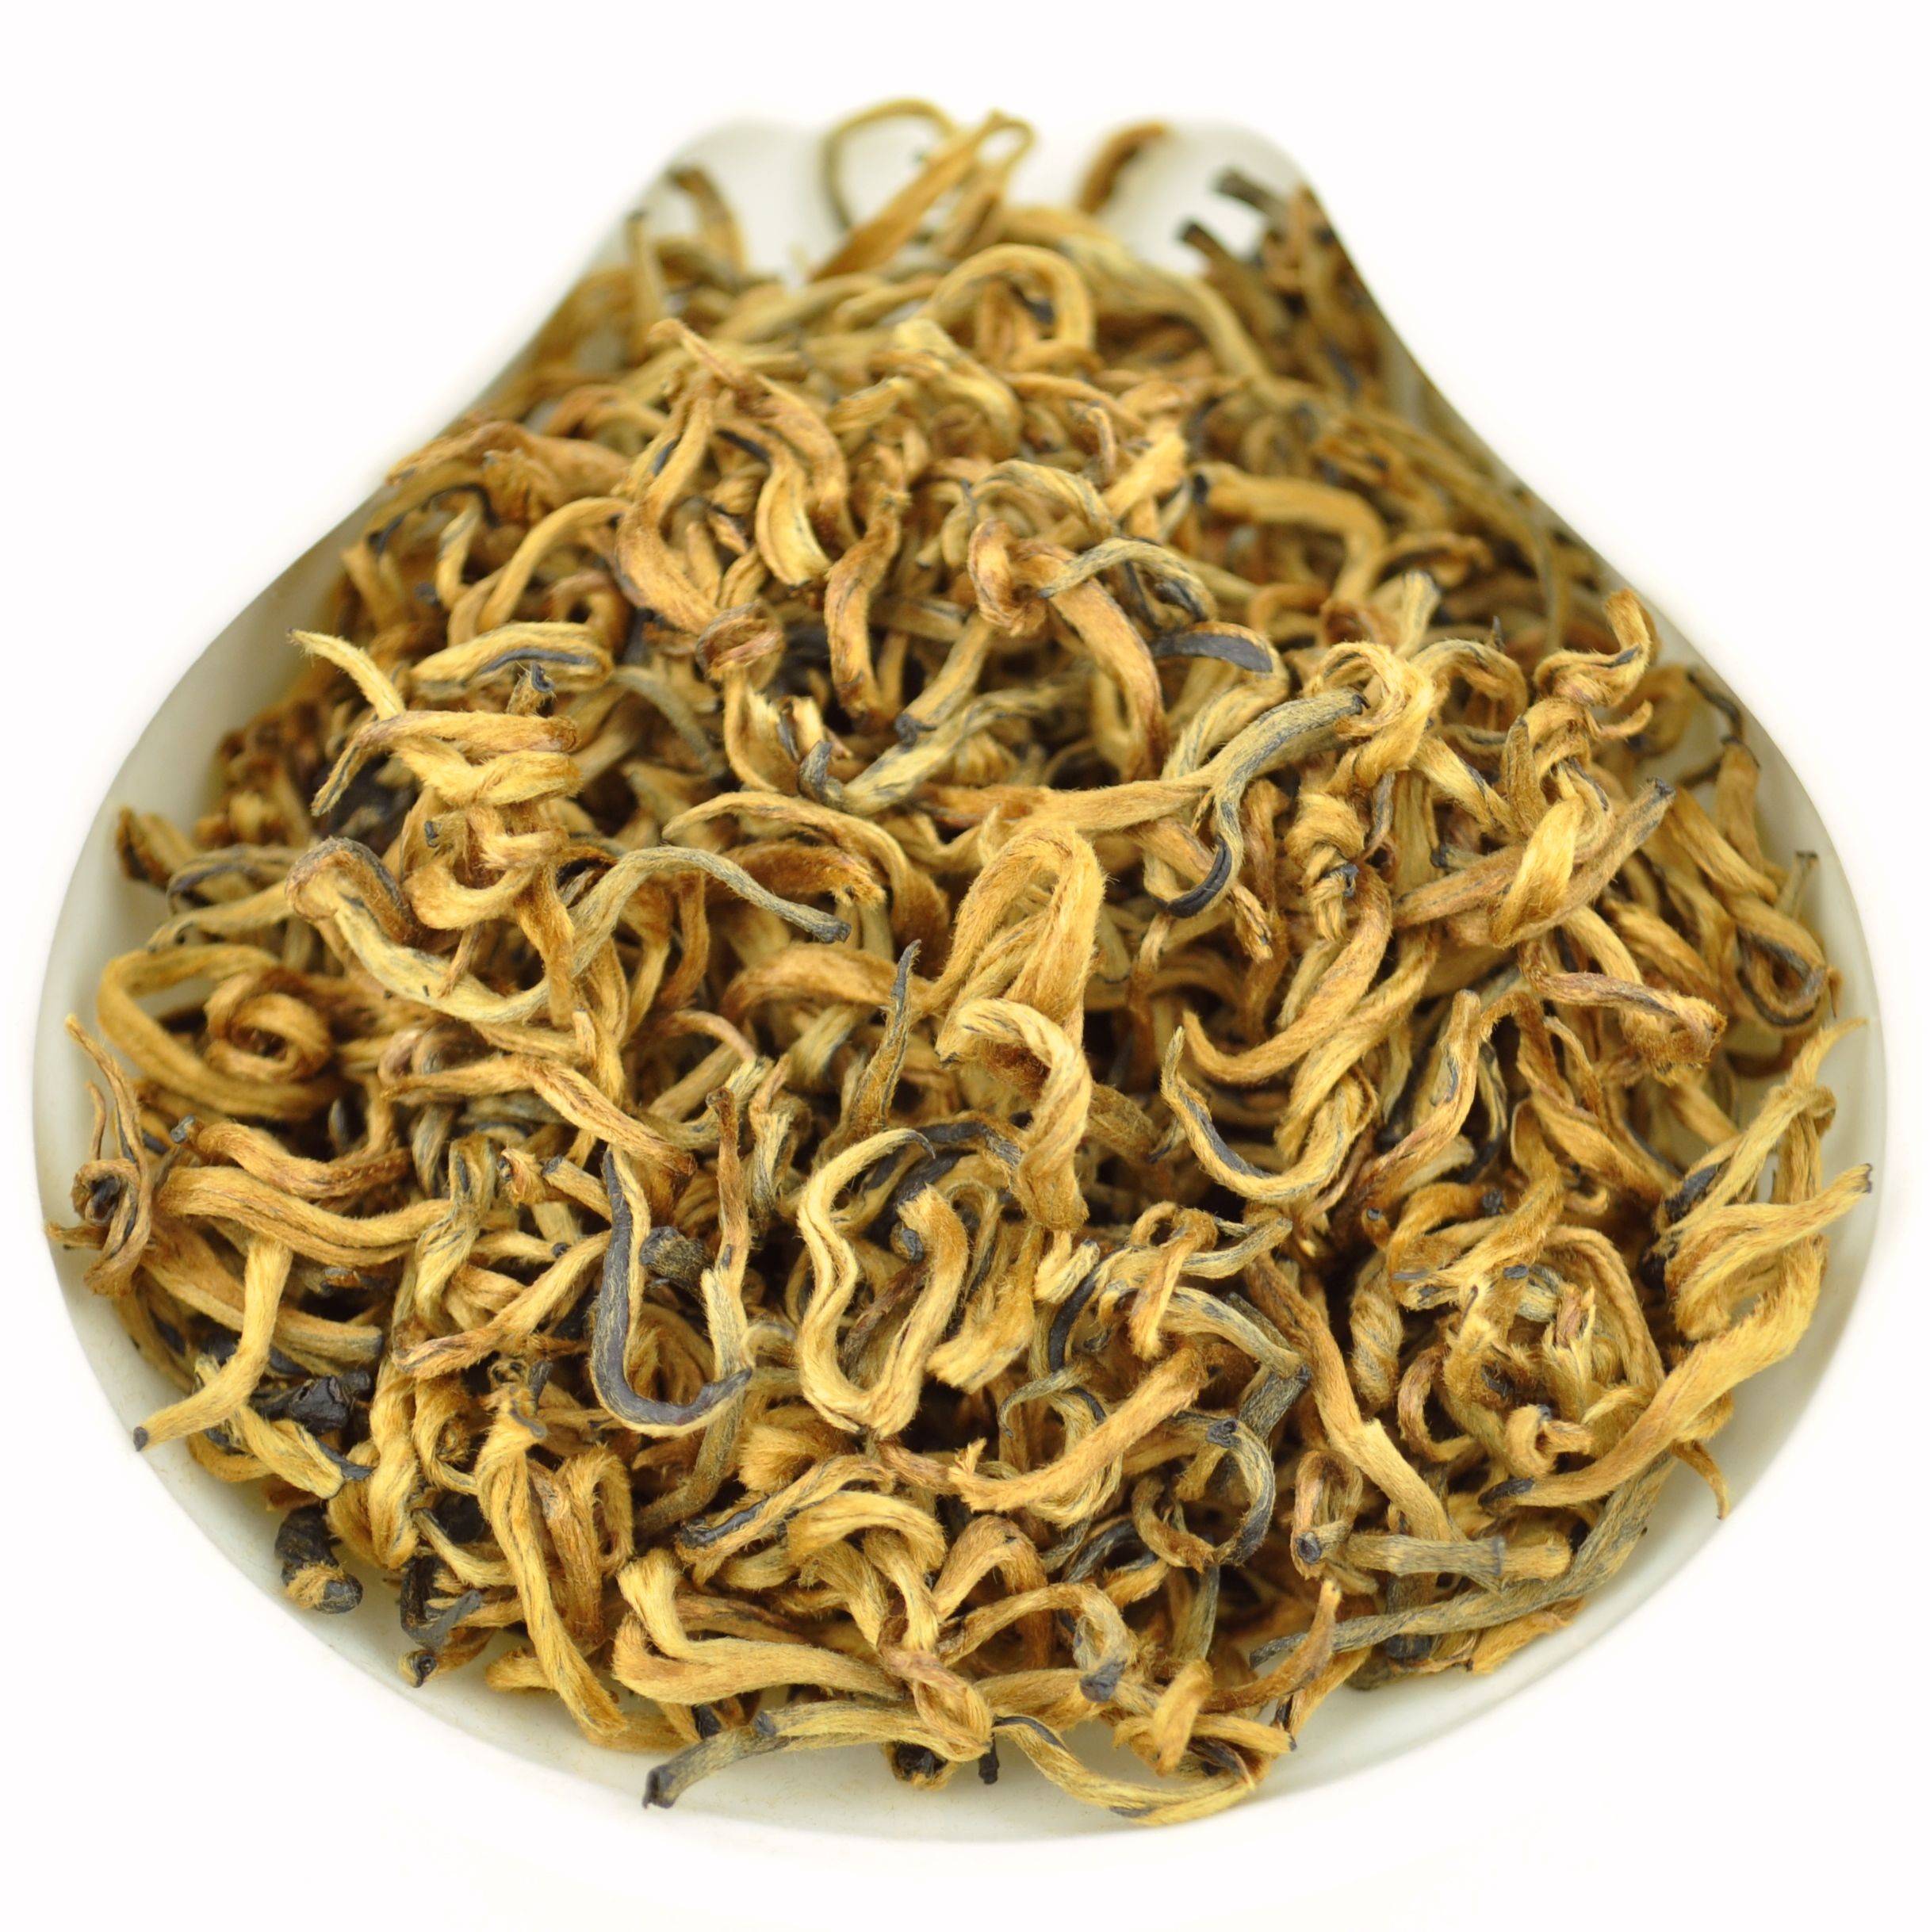 Imperial Mojiang Golden Bud Yunnan Black Tea * Autumn 2015